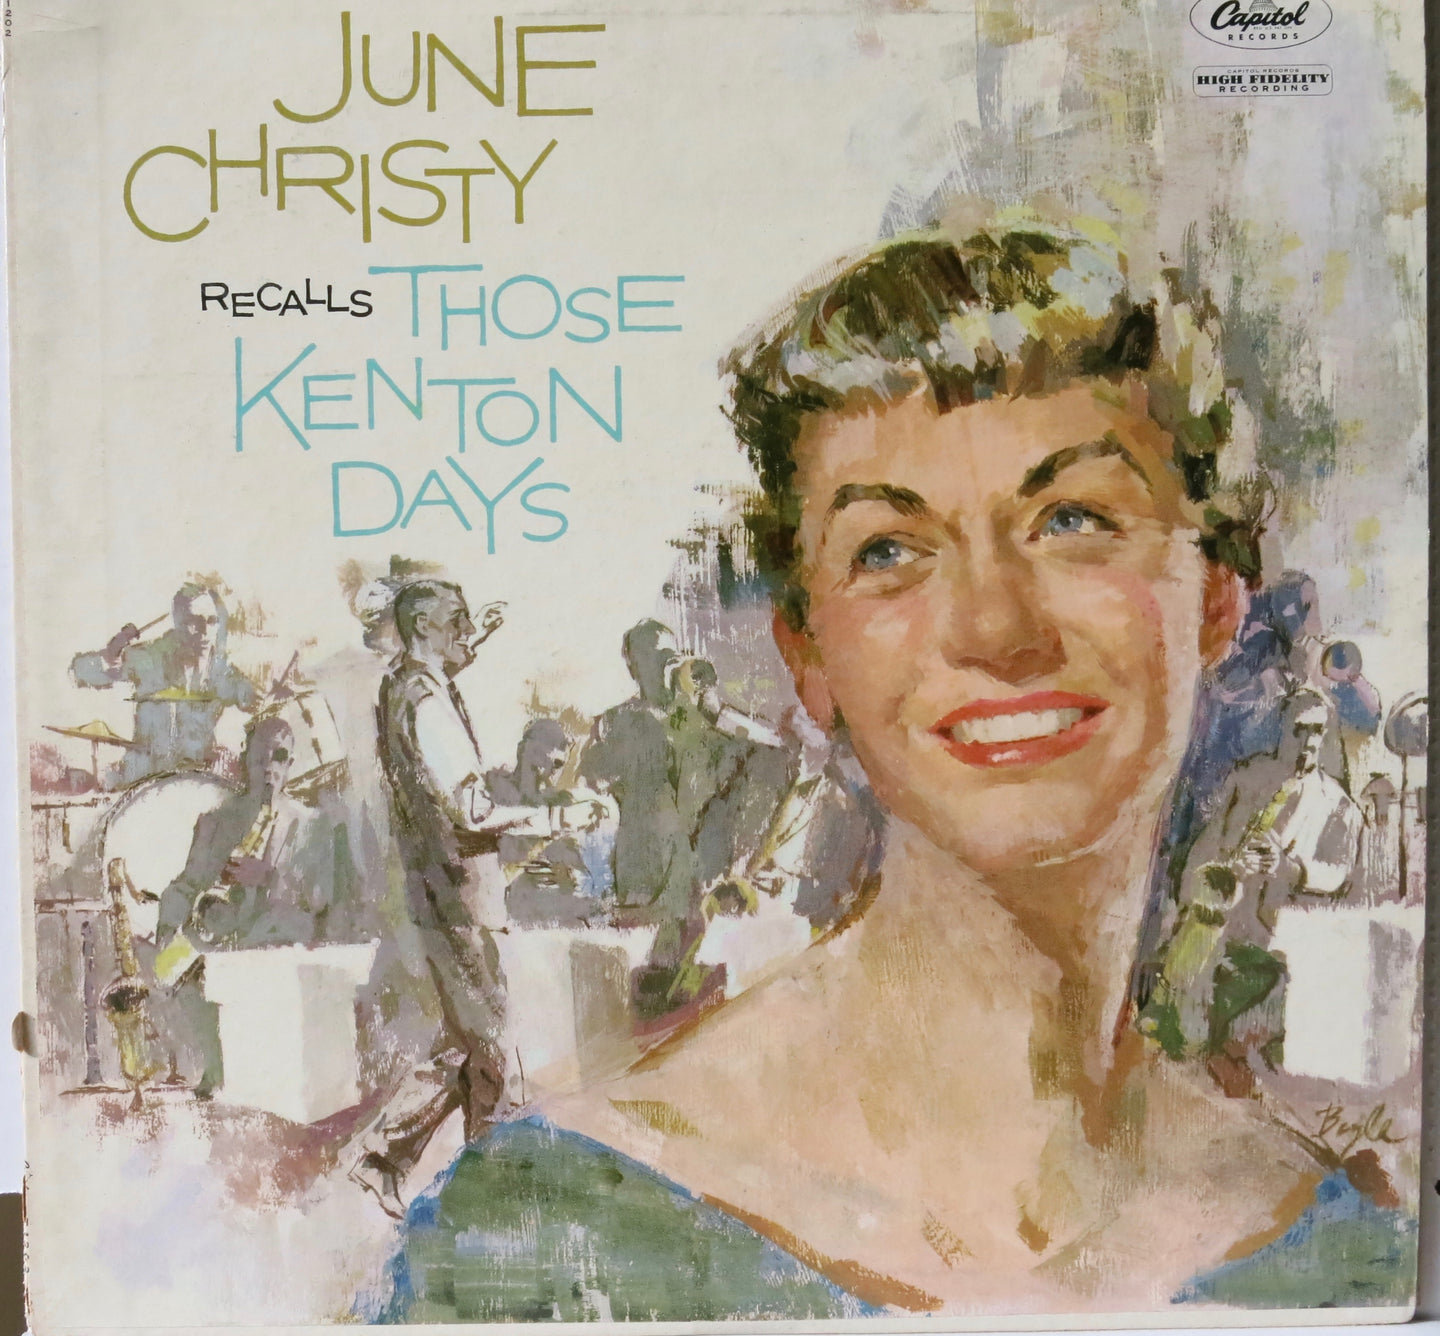 June Christy ‎– June Christy Recalls Those Kenton Days